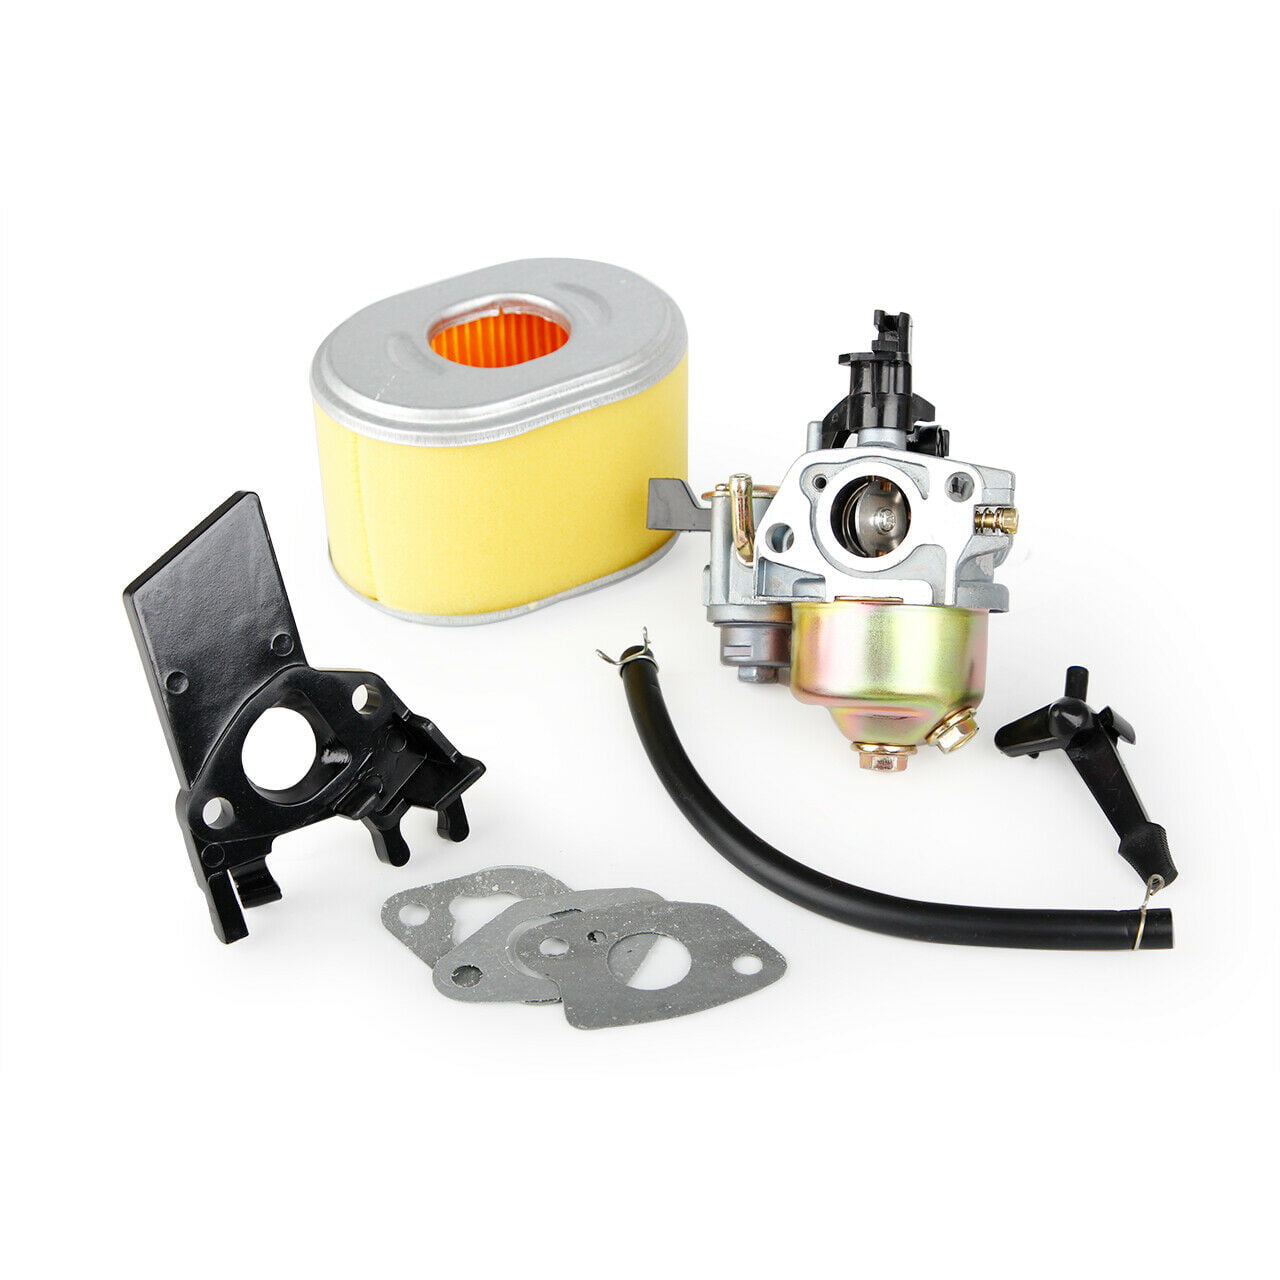 Details about   Carb For Honda ENGINE GX140 168F WaterPump Pressure Washer Carburetor Lawnmower 